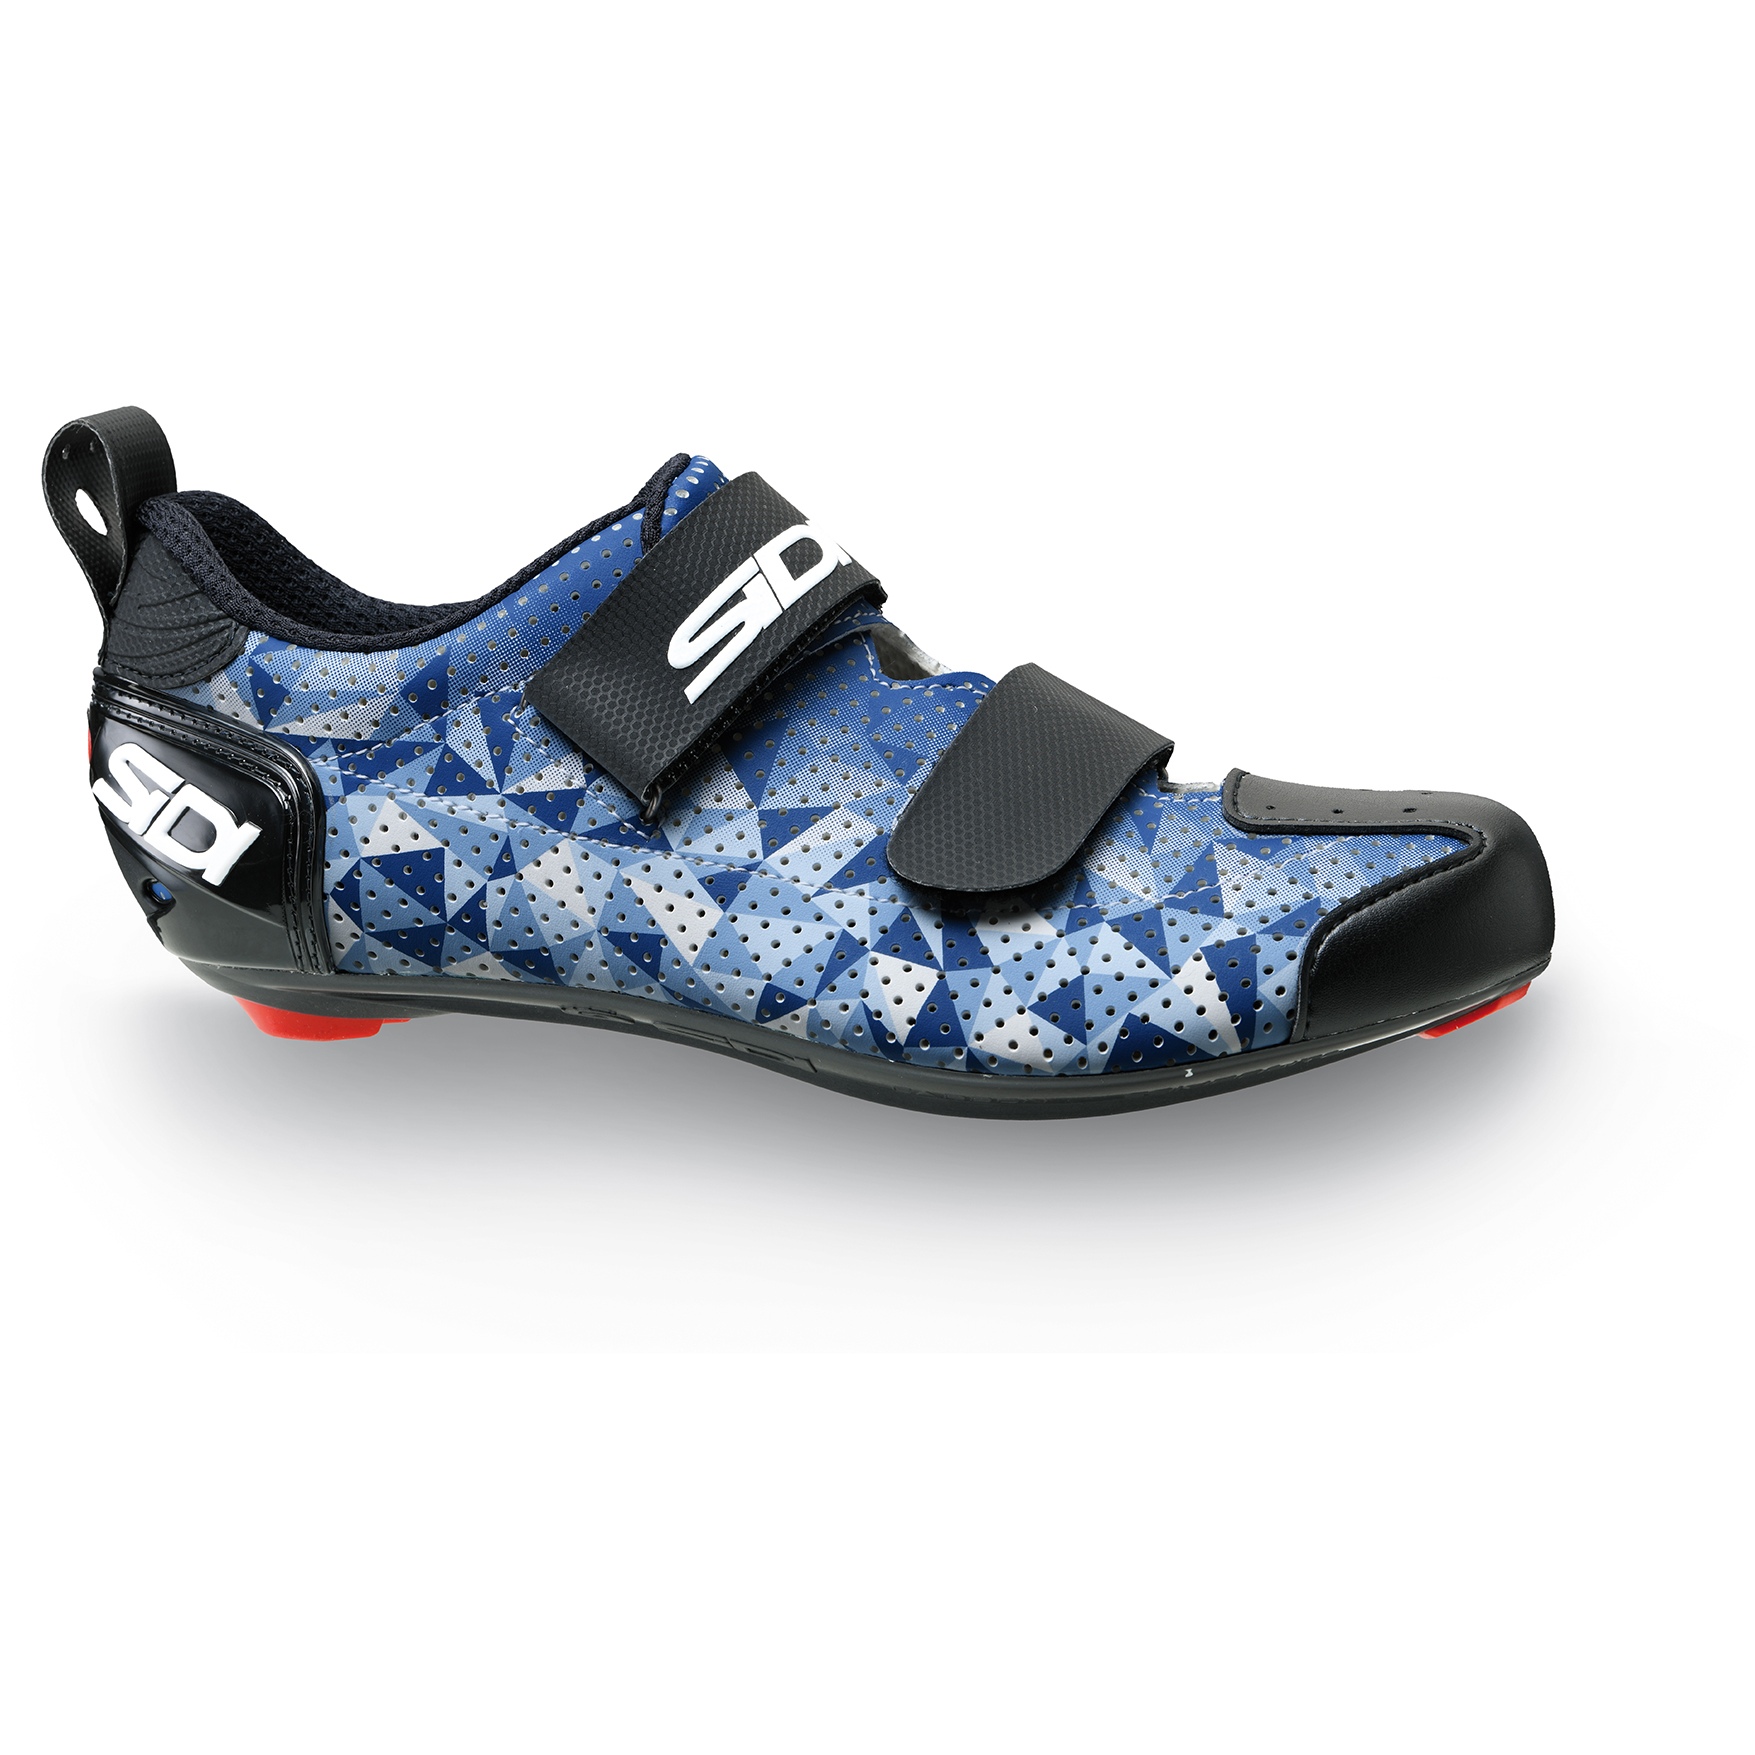 Picture of Sidi T-5 Air Triathlon Shoes - Blue/White/Black